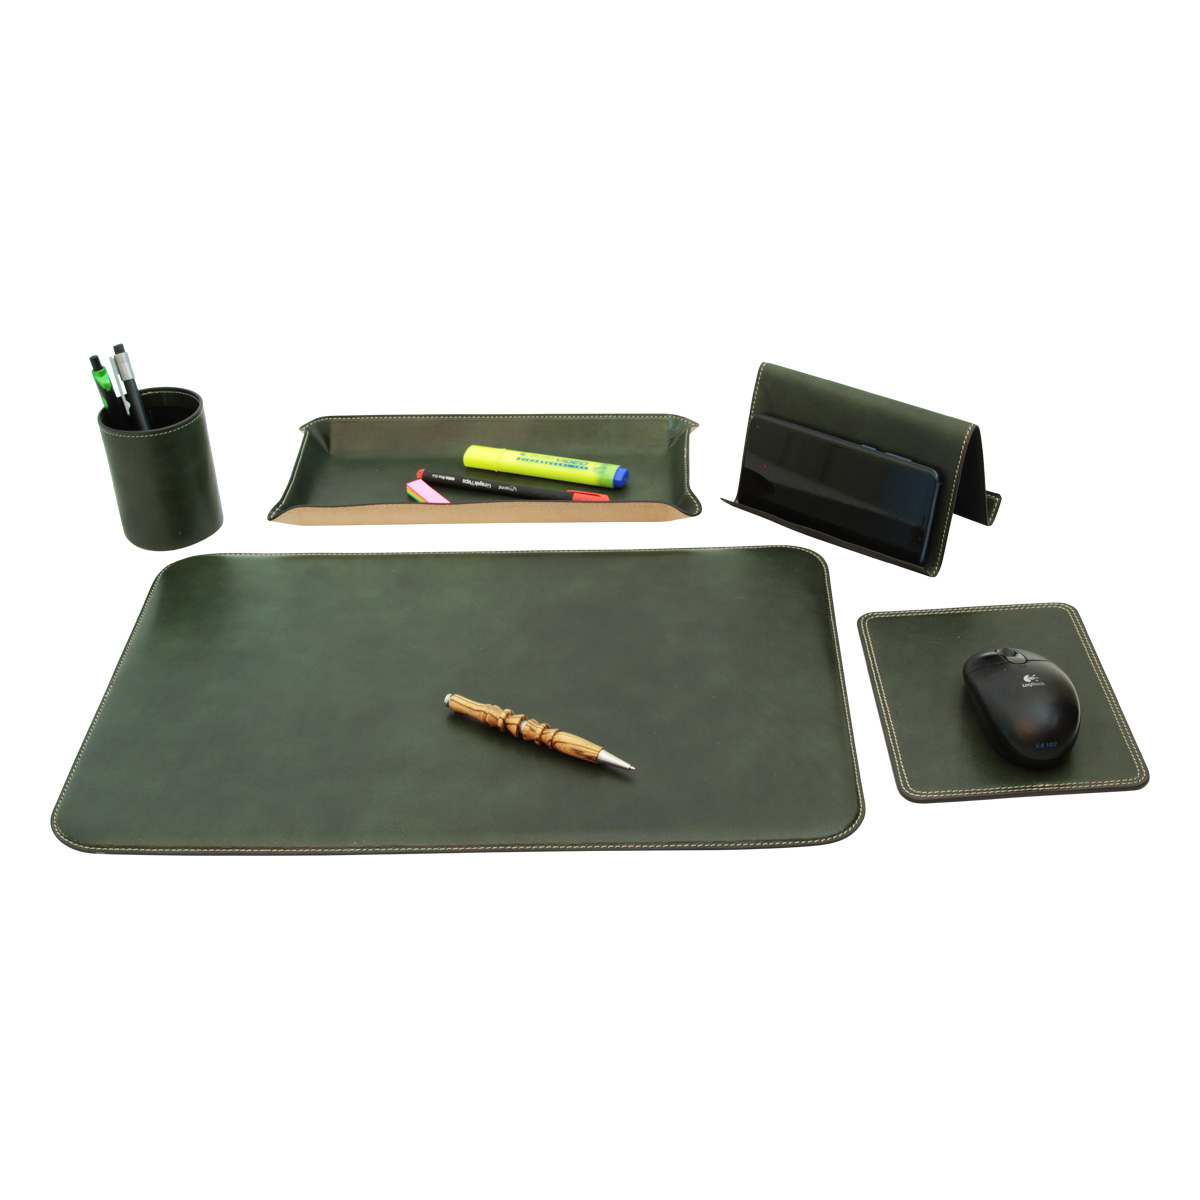 Leather desk kit - 5 pcs   green|769089VE|Old Angler Firenze